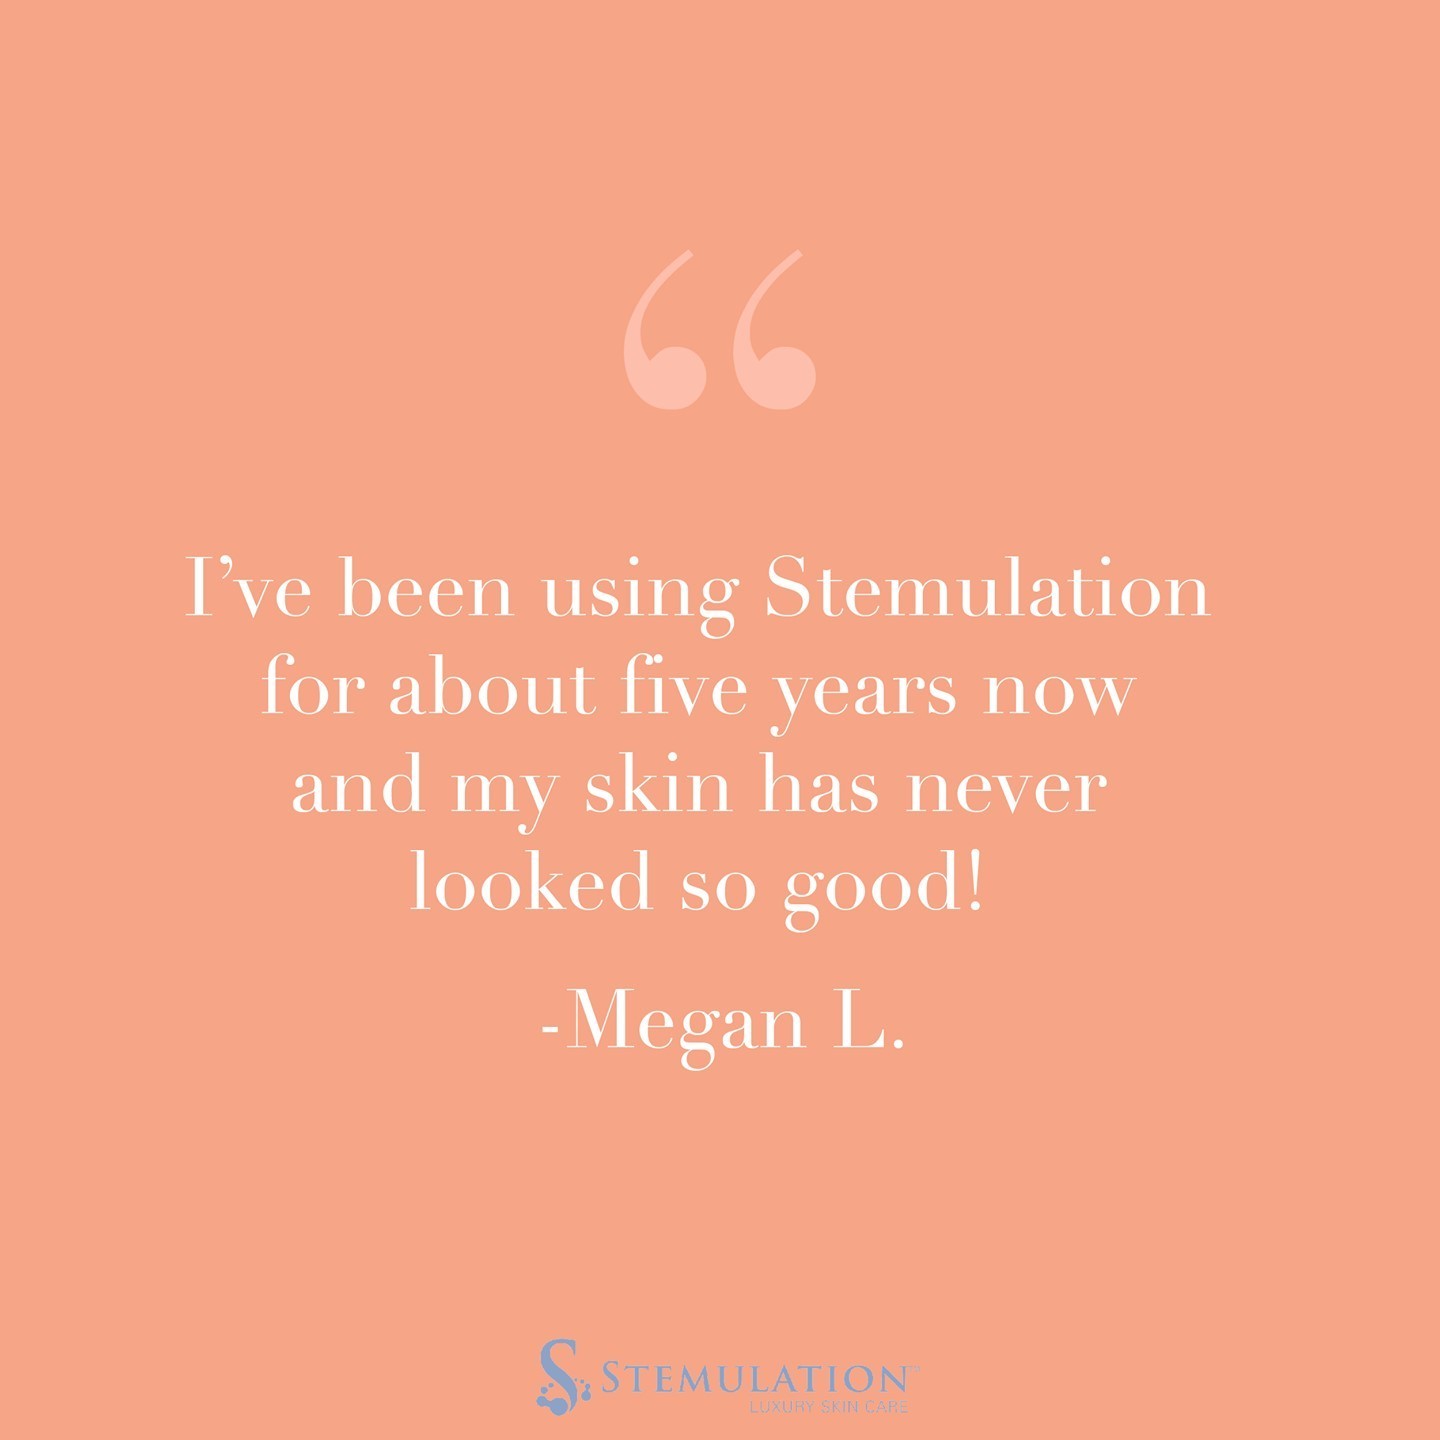 Stemulation skincare review